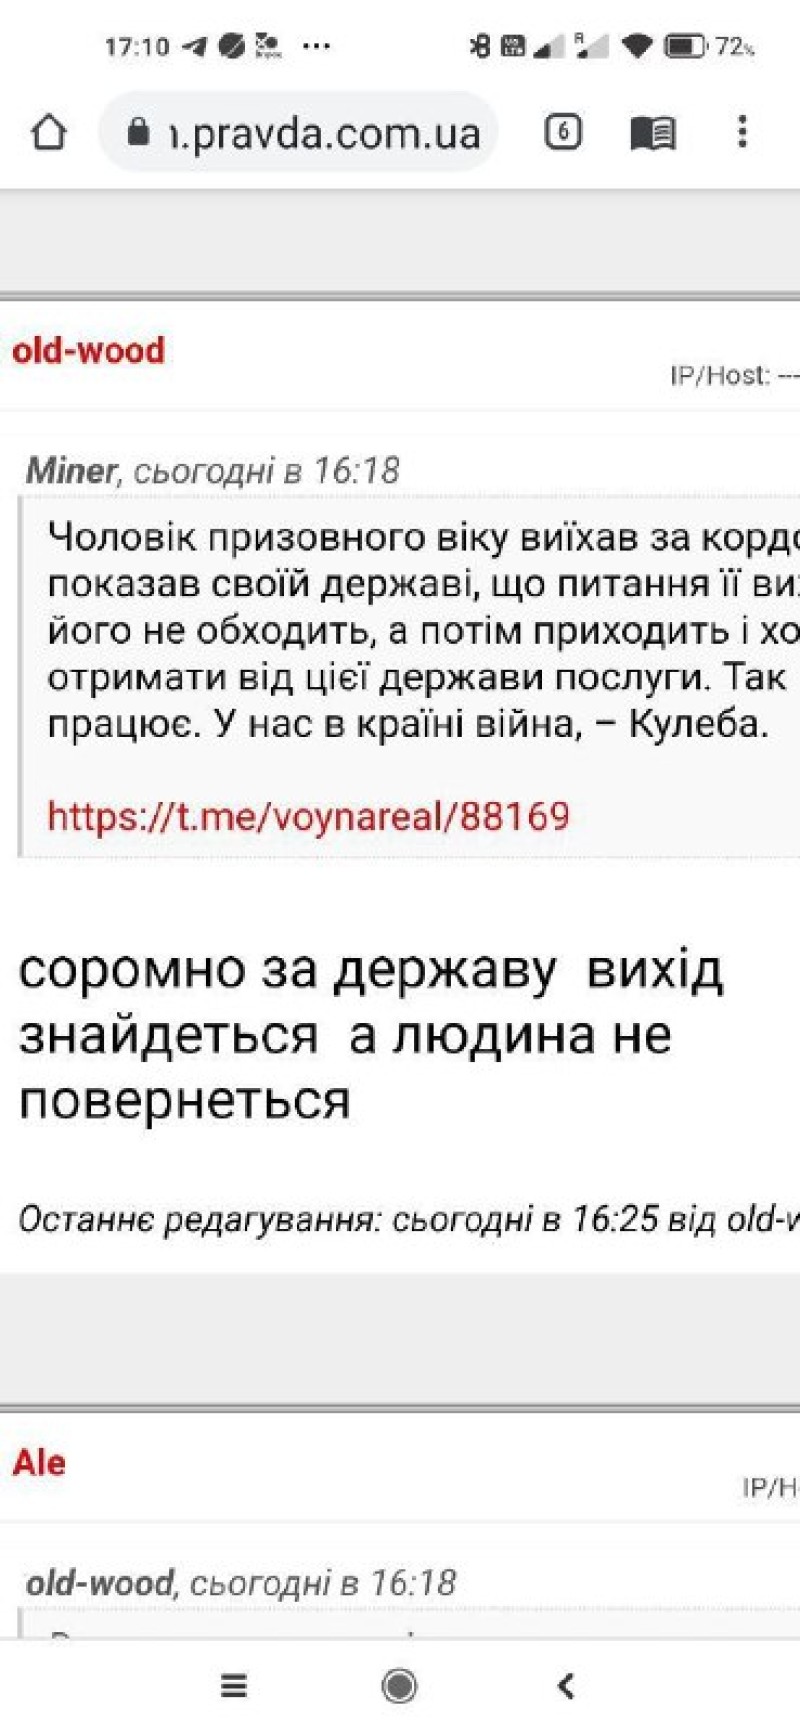 Screenshots from the most Russophobic Internet dumps in Ukraine.